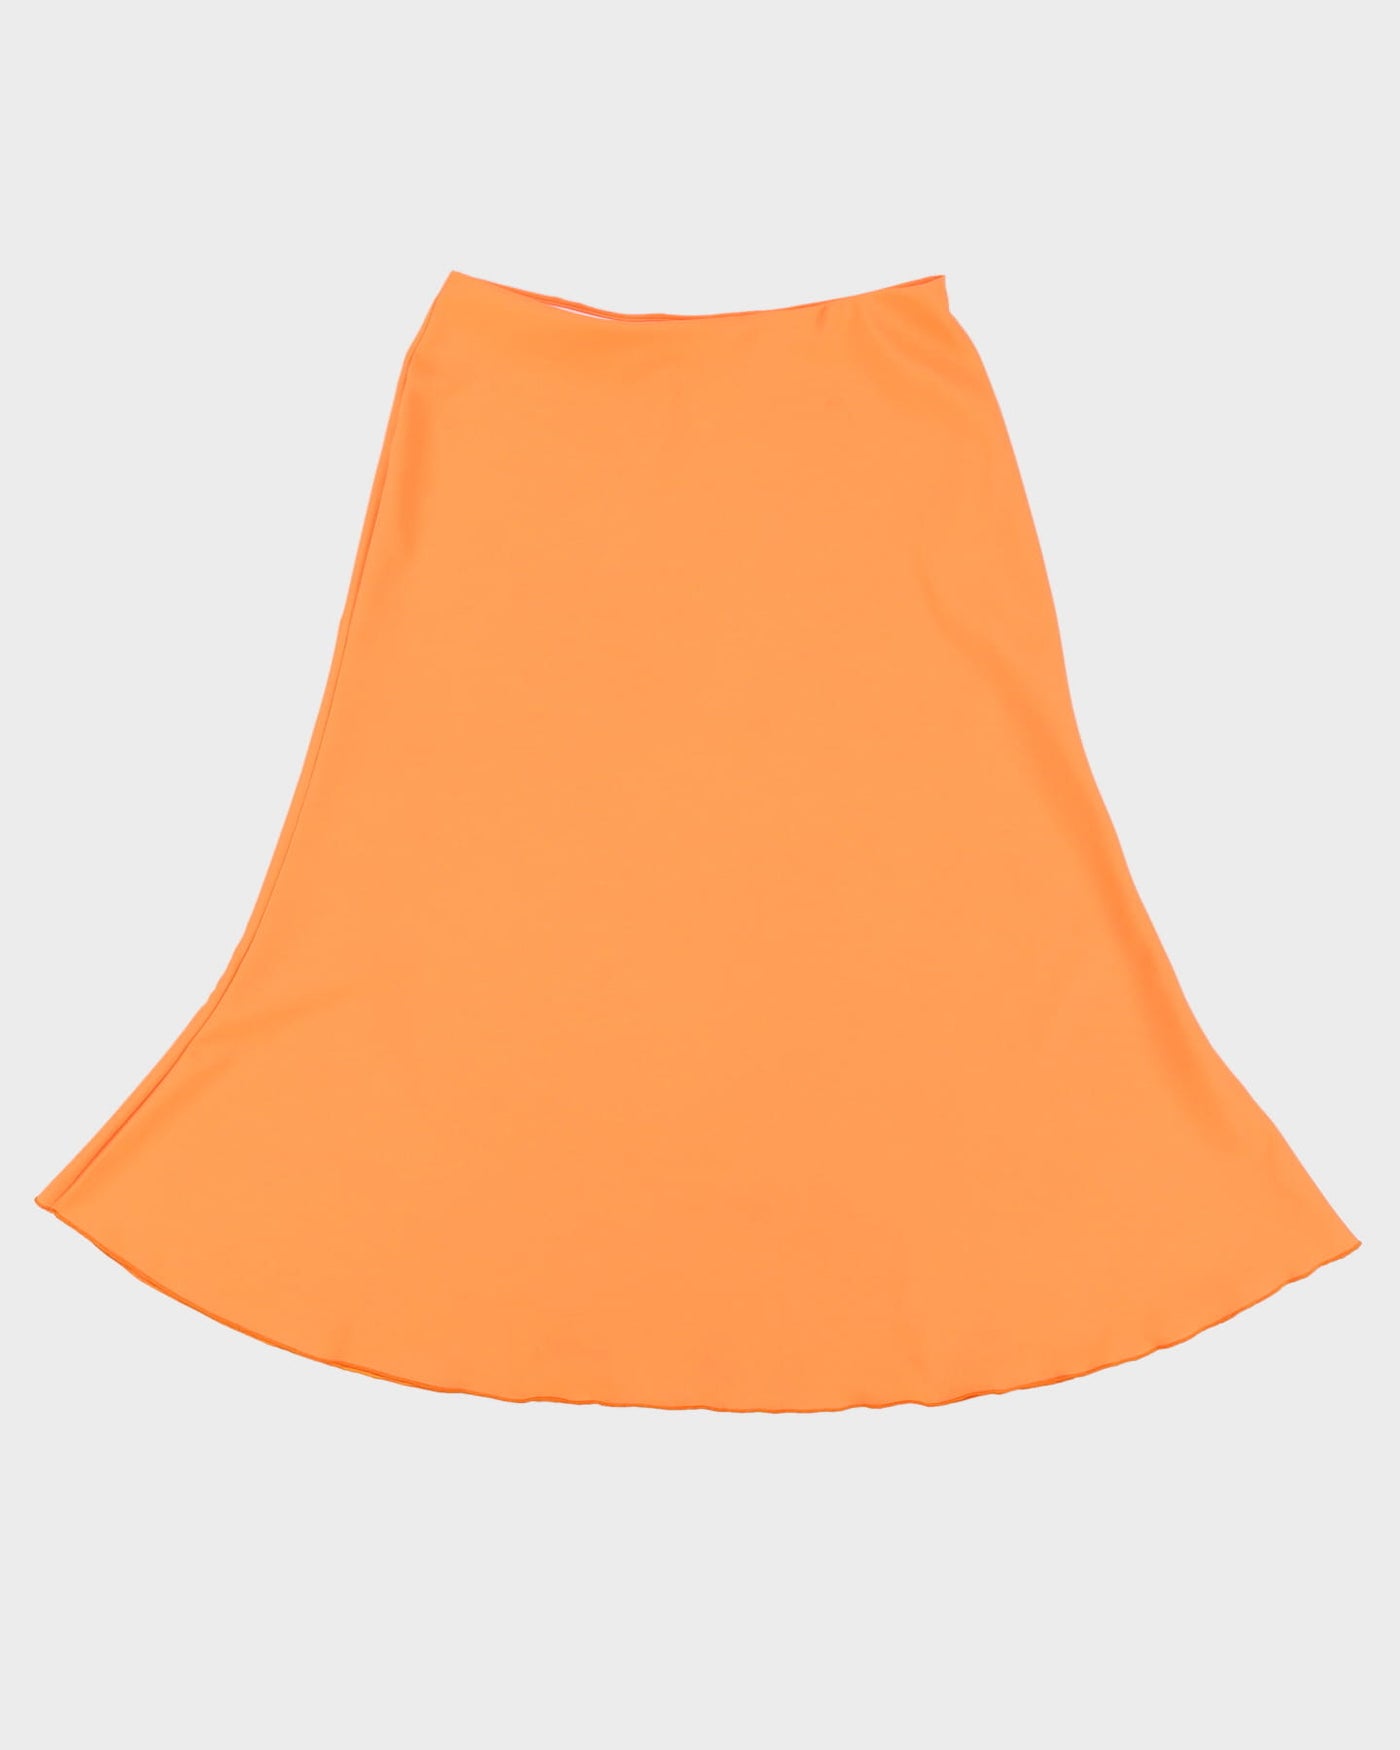 Rokit Originals Faery Orange Skirt - XL